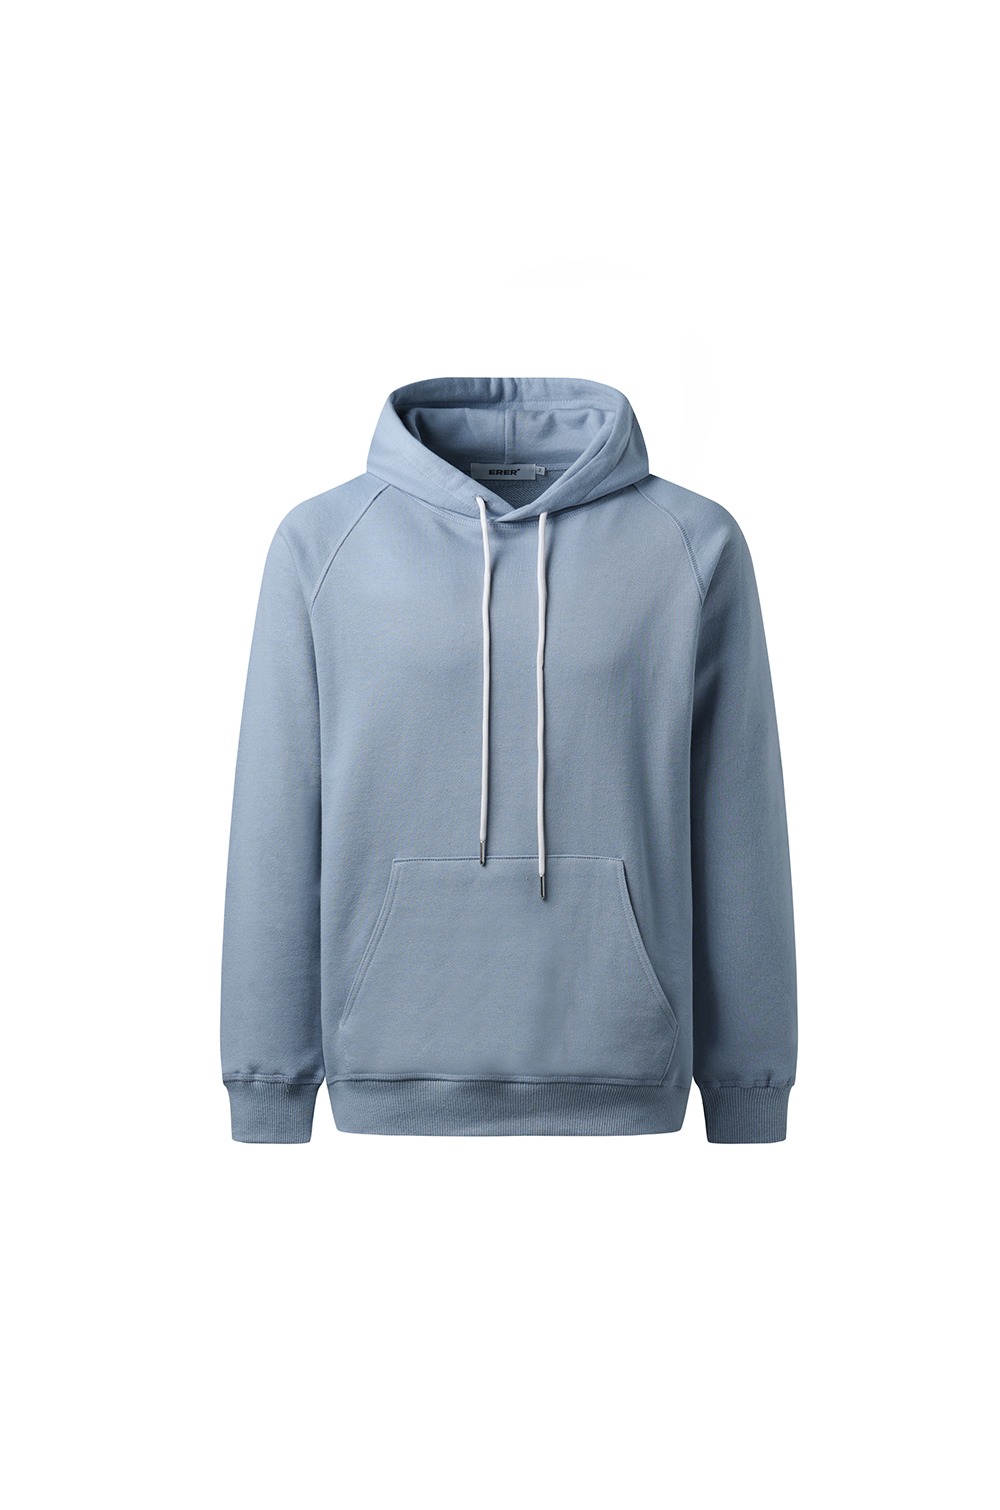 [UN] Basic hoodie - Sky blue